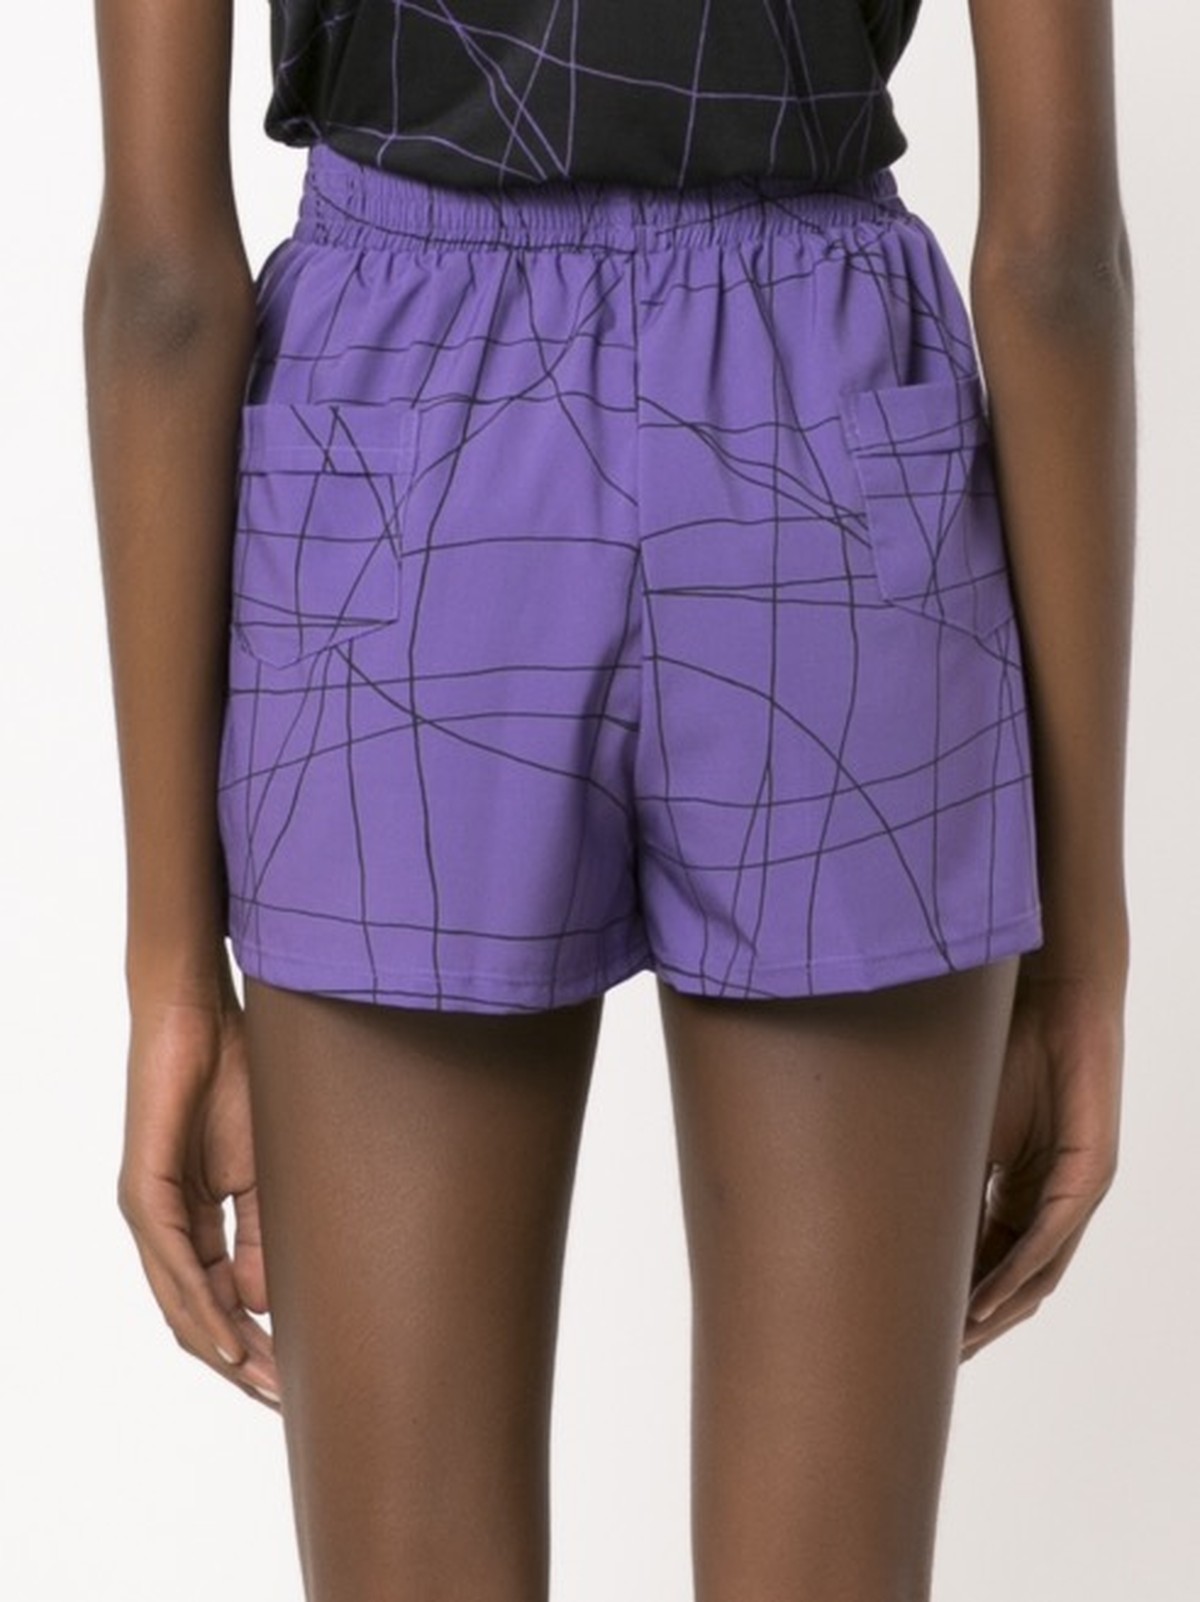 shorts com estampa geométrica